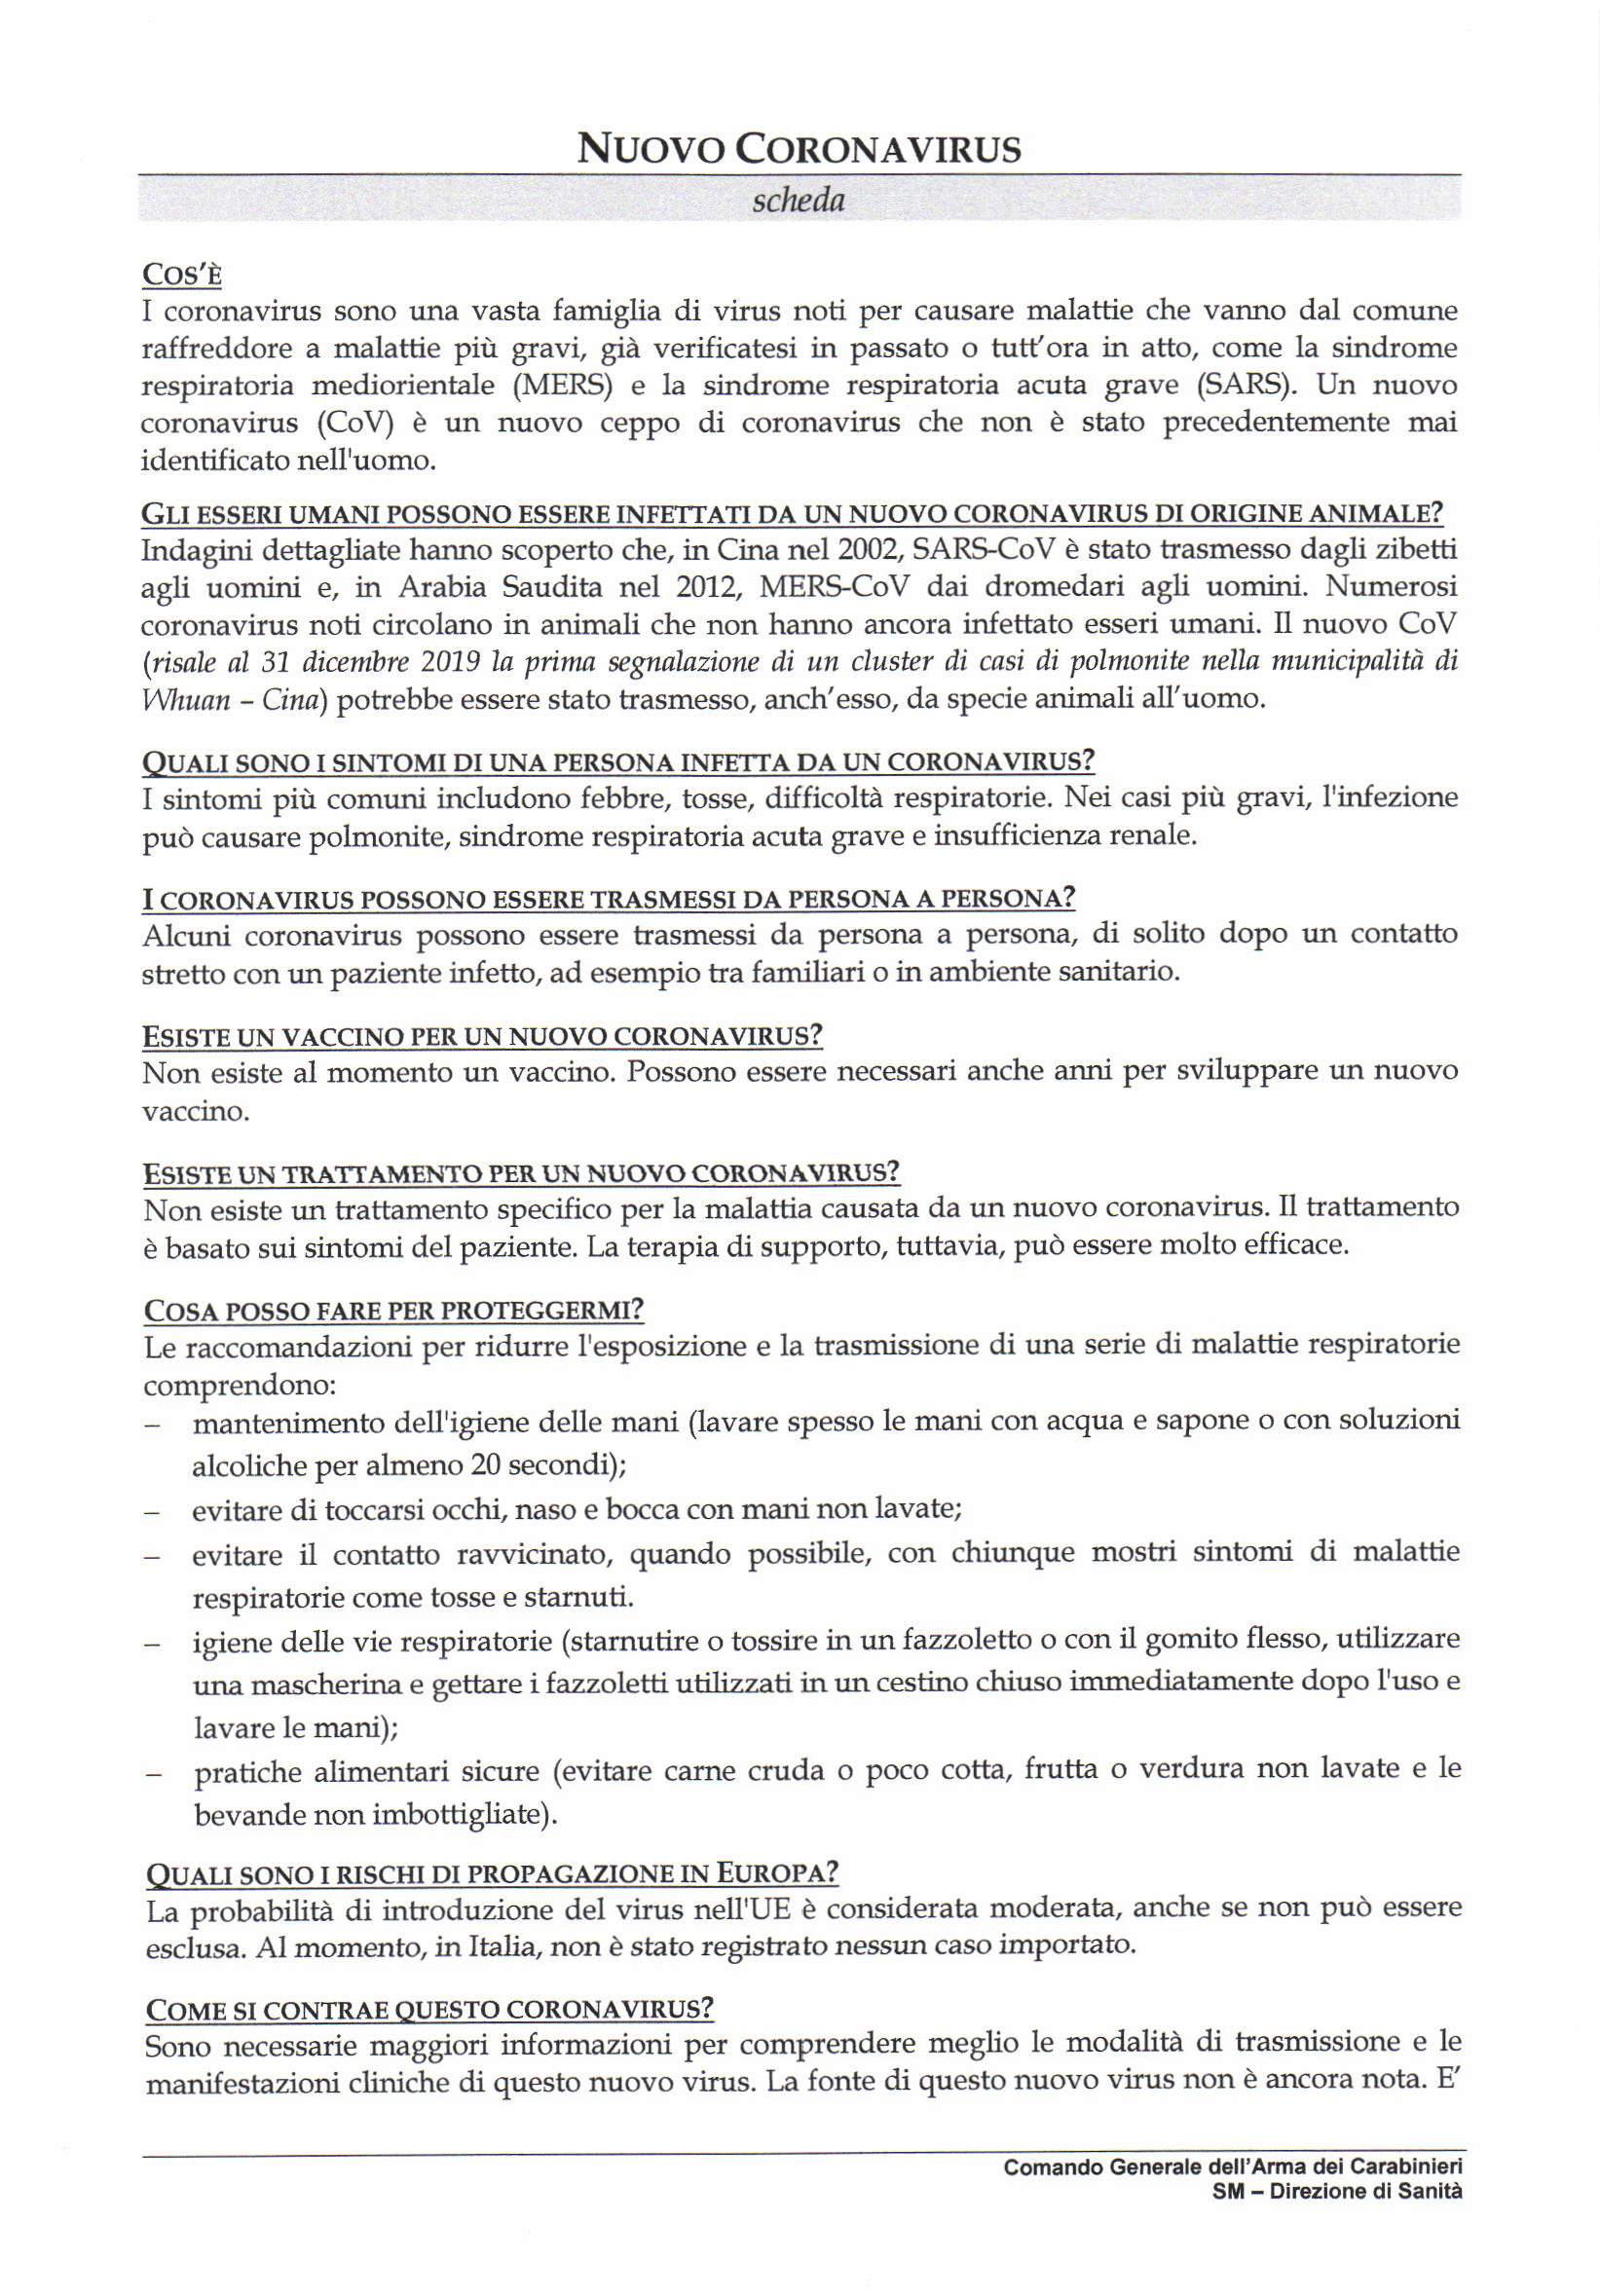 Infezione da coronavirus 2019-nCoV (Vademecum Comando Arma Carabinieri)